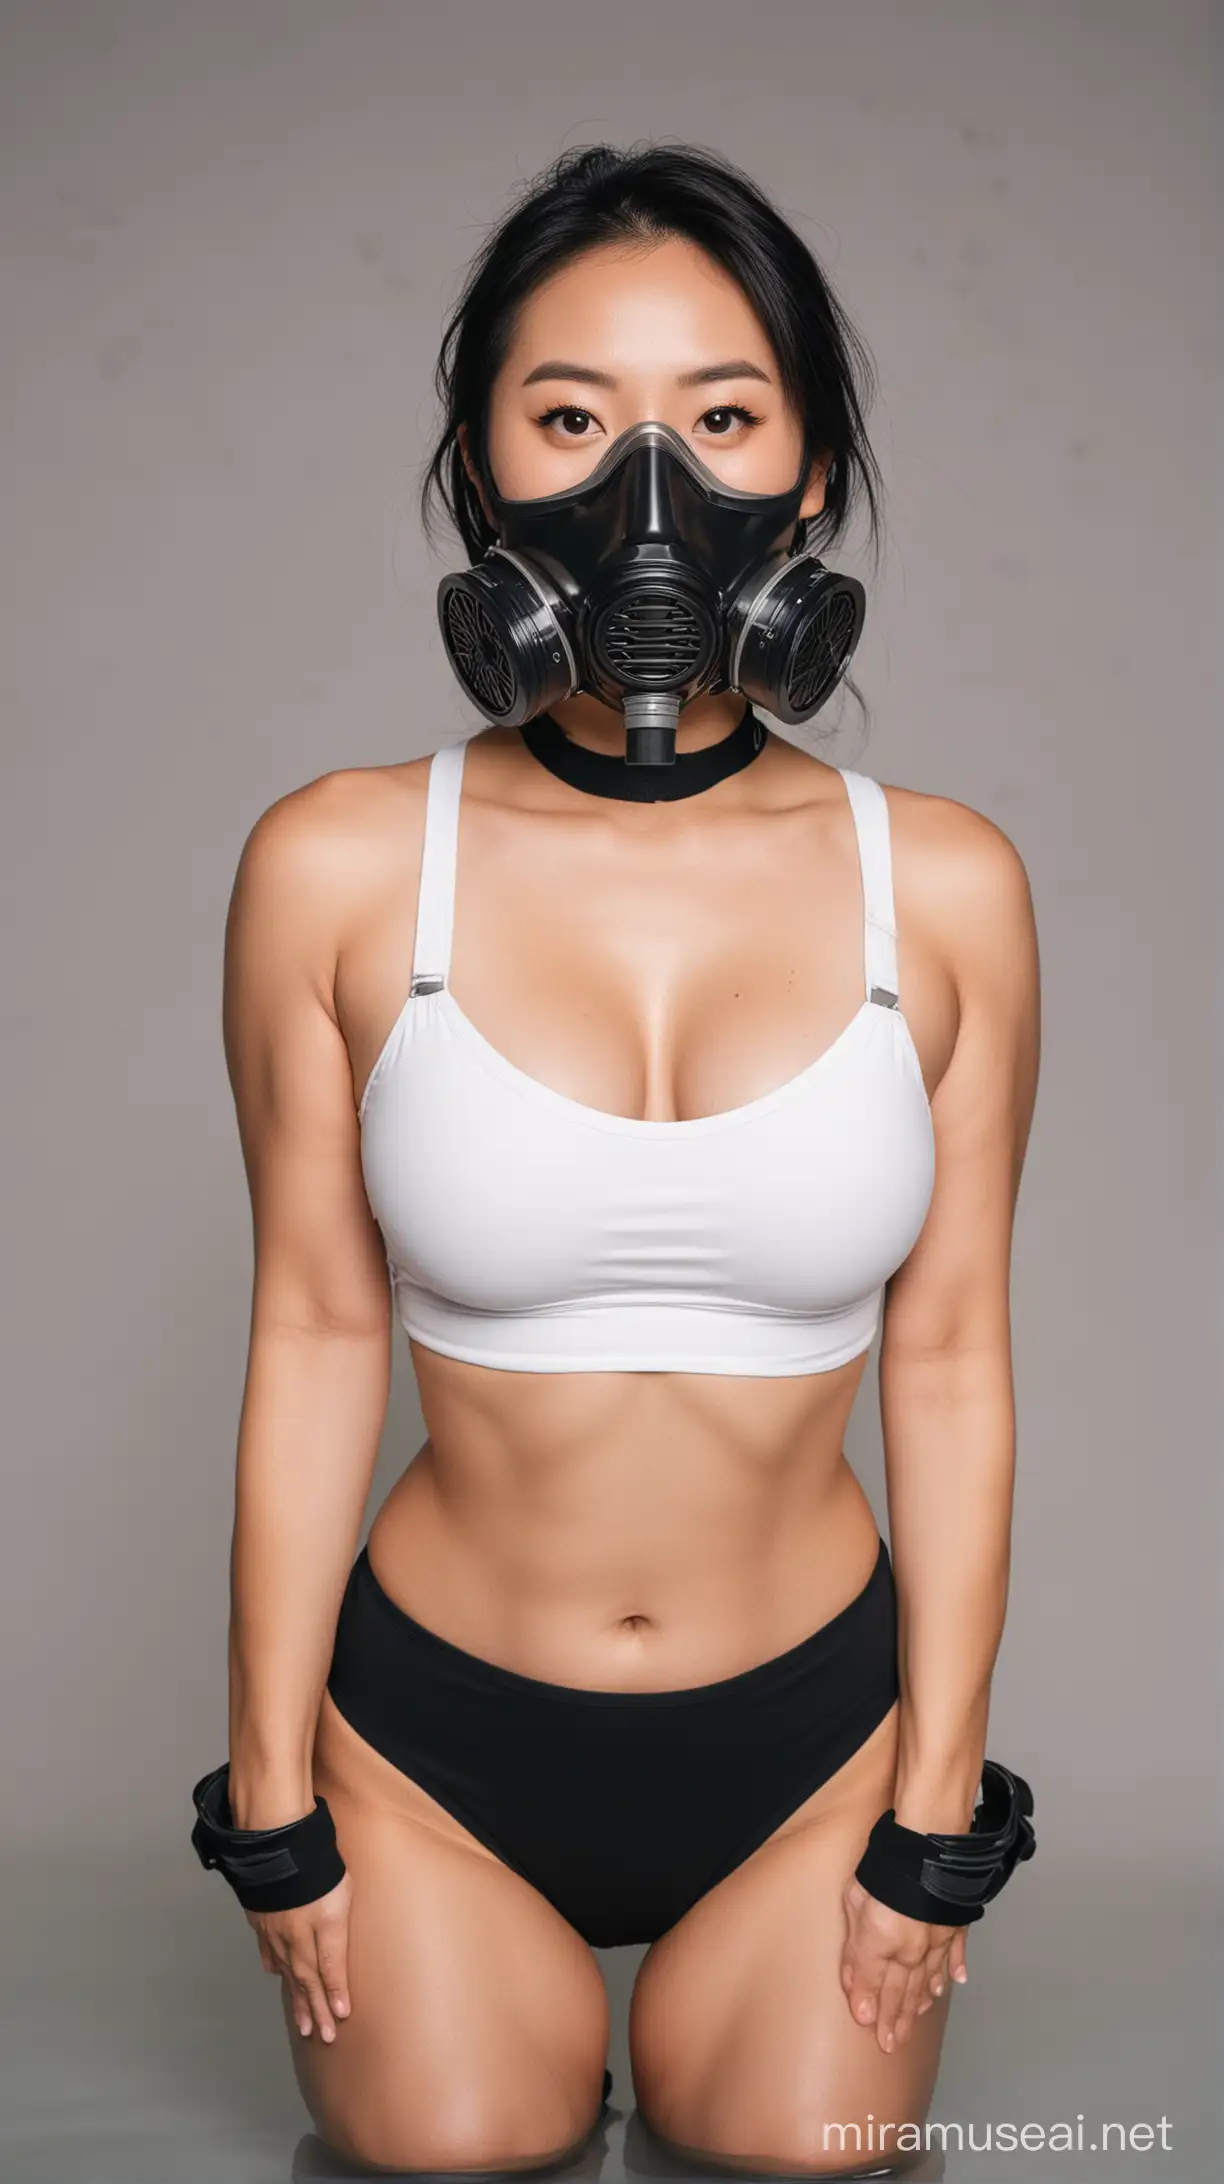 Asian Woman in Gas Mask and Swimwear